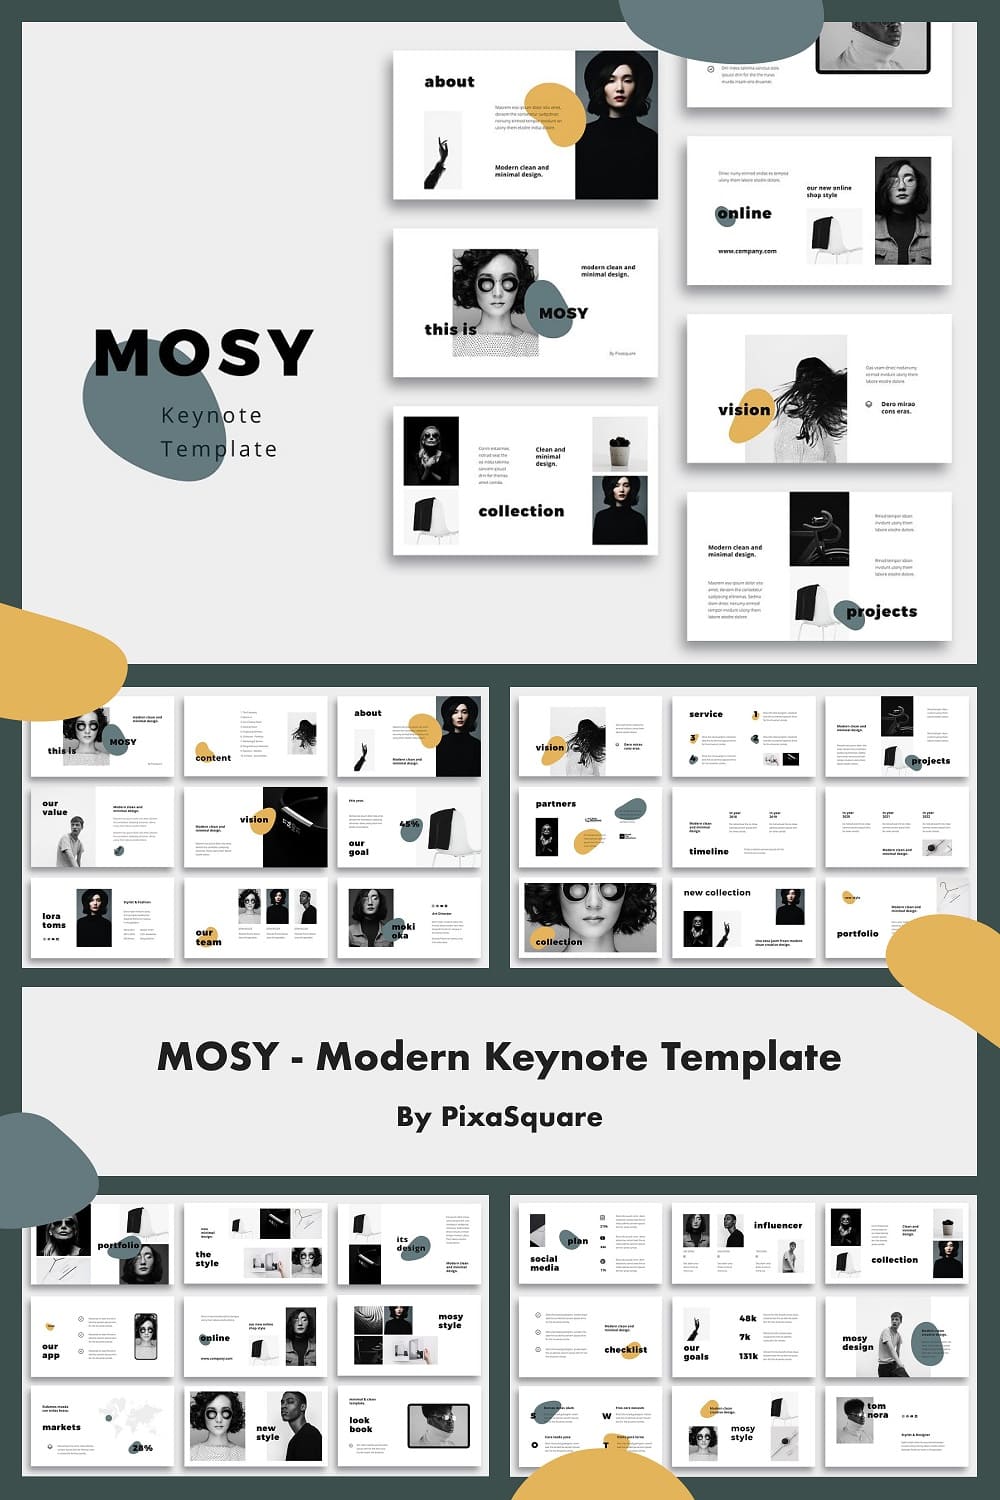 Mosy modern template for keynote, 7 slides.